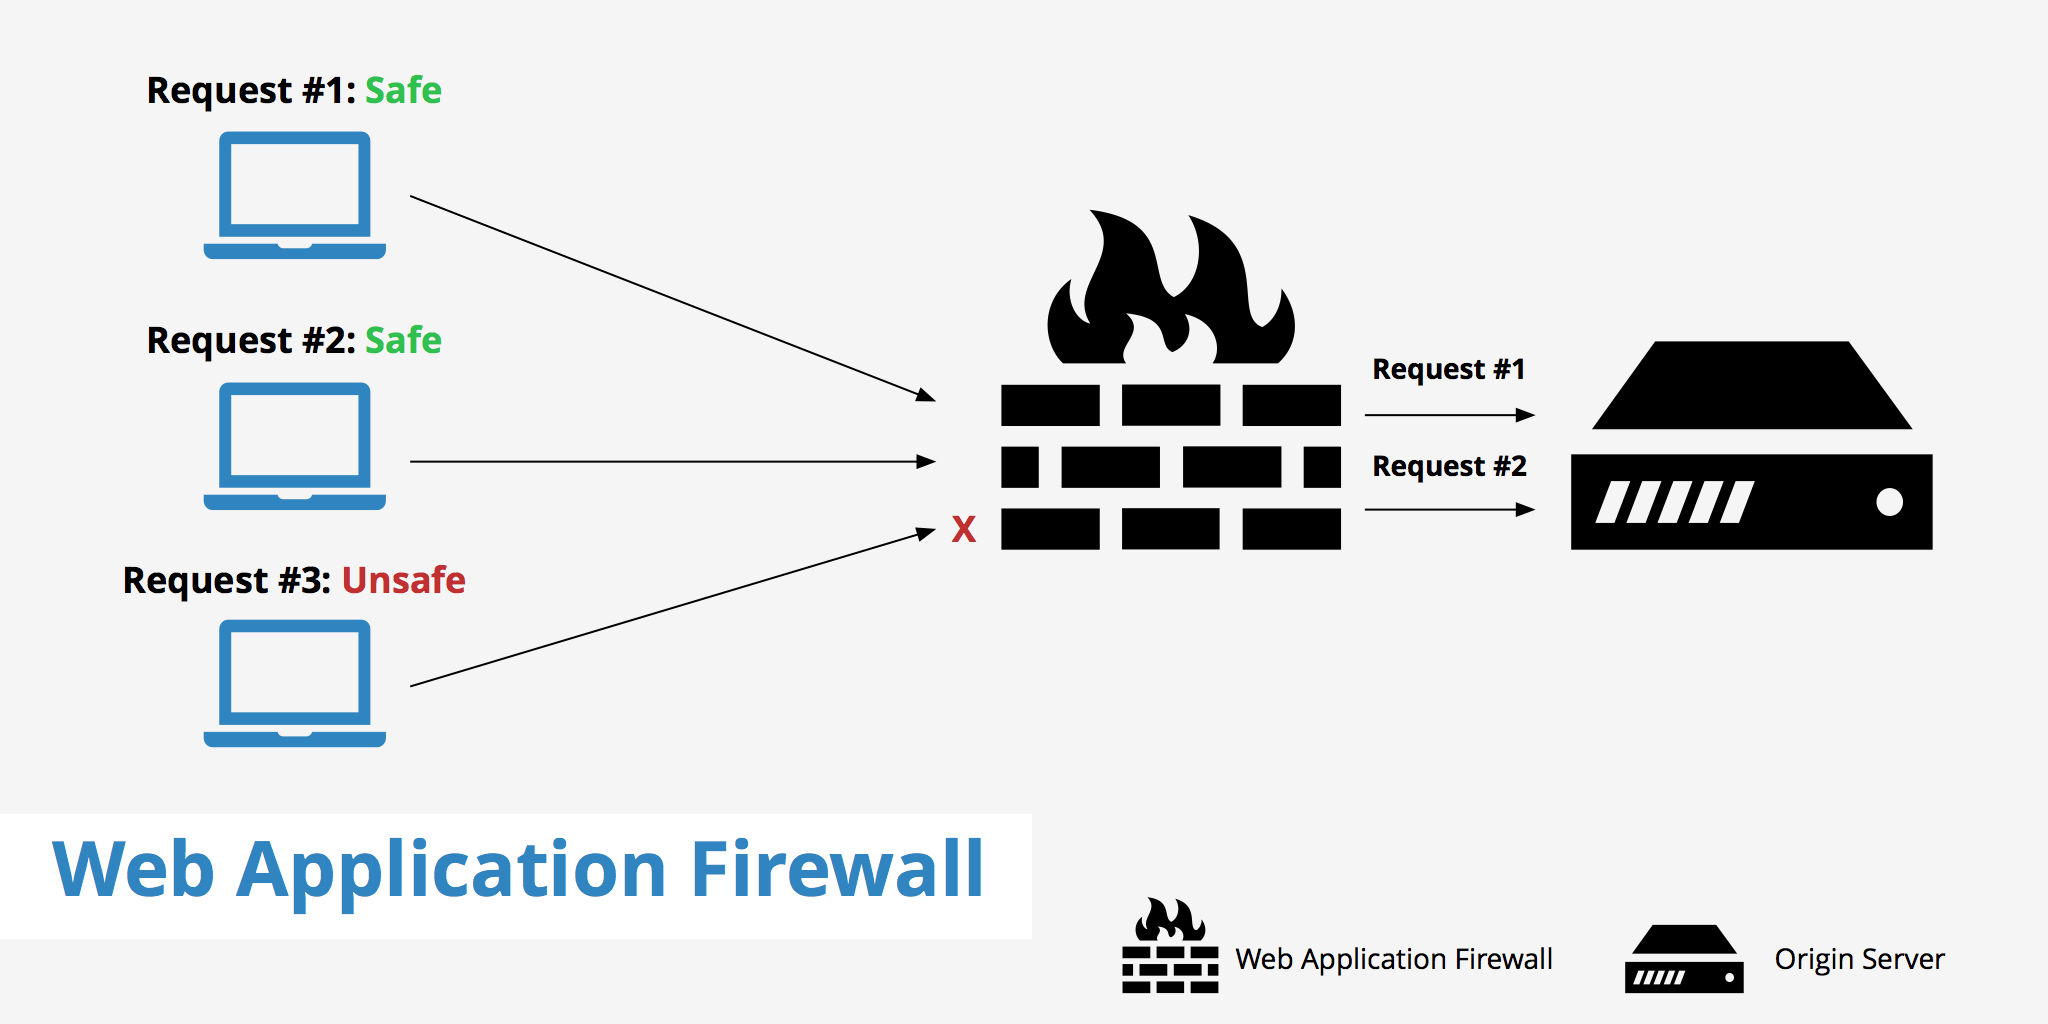 Web Application Firewall - KeyCDN Support